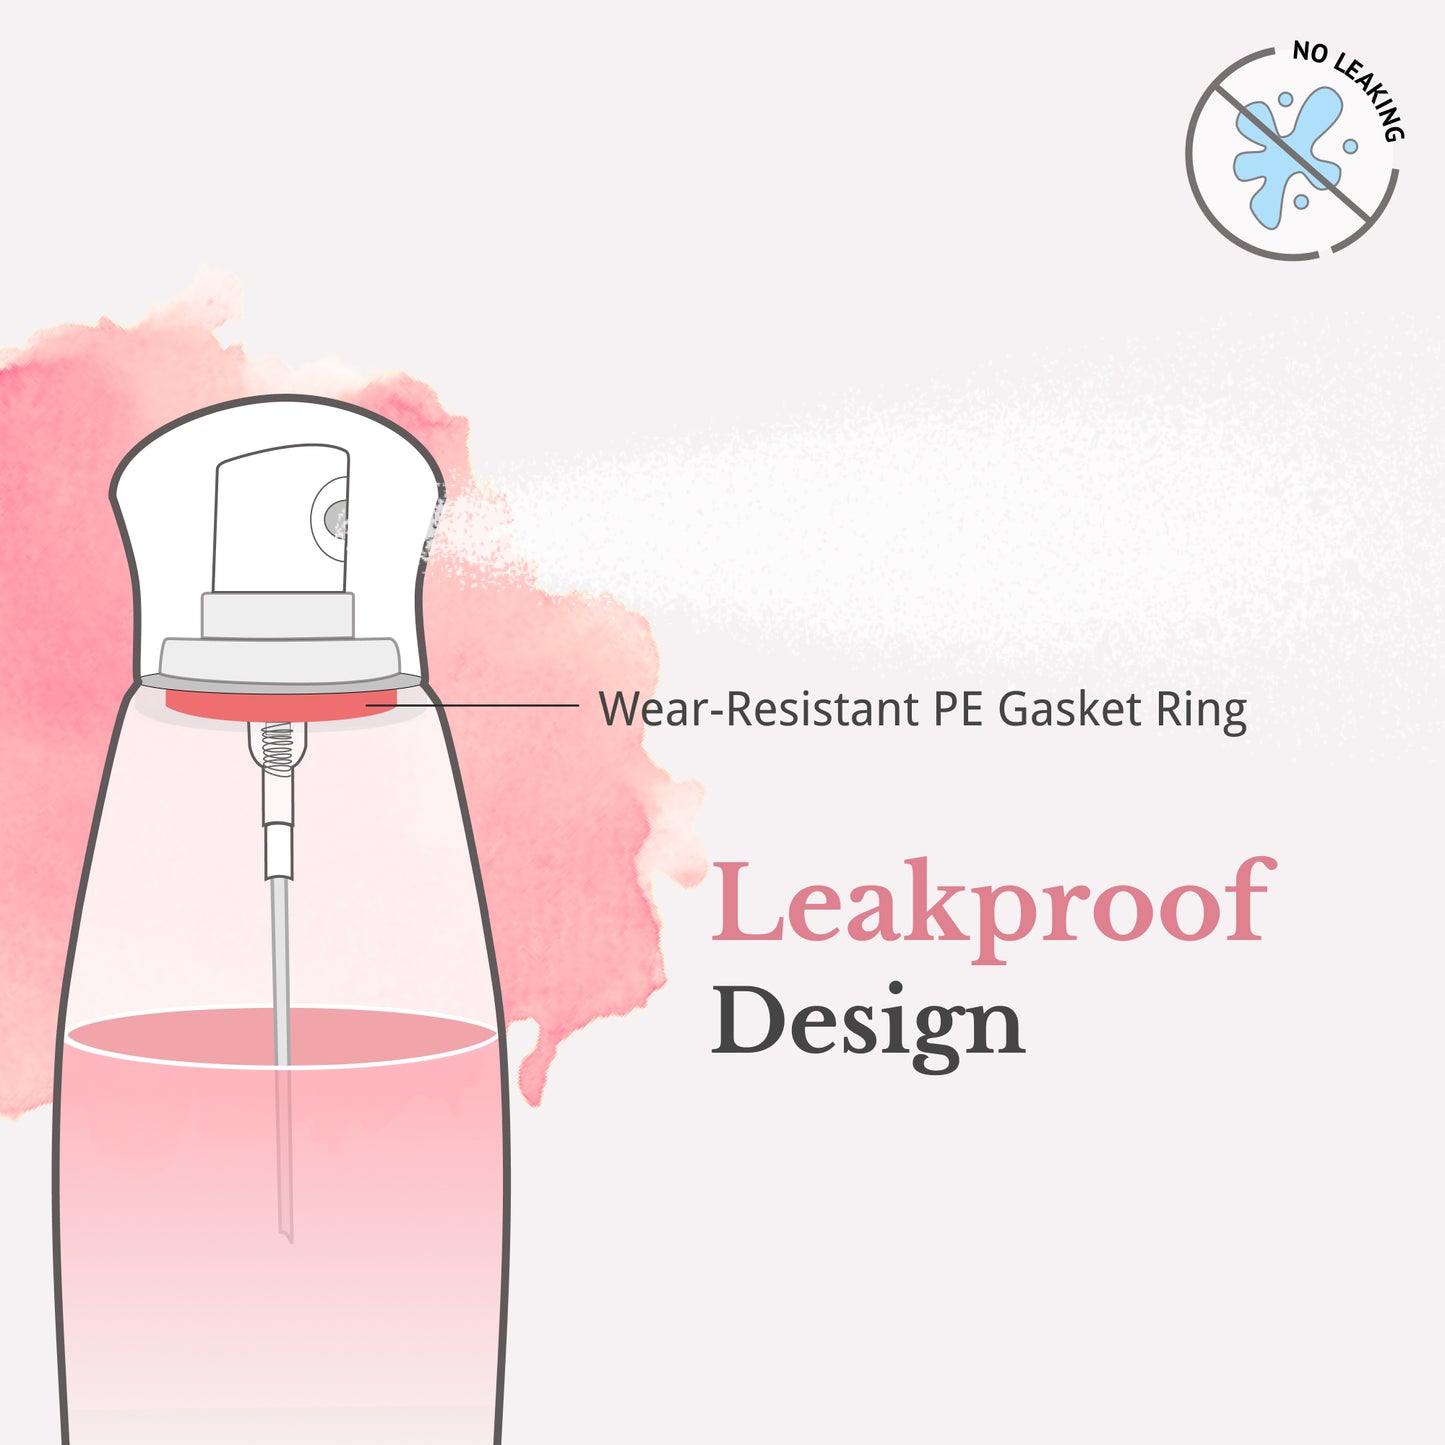 Leak proof design with wear resistant PE gasket ring